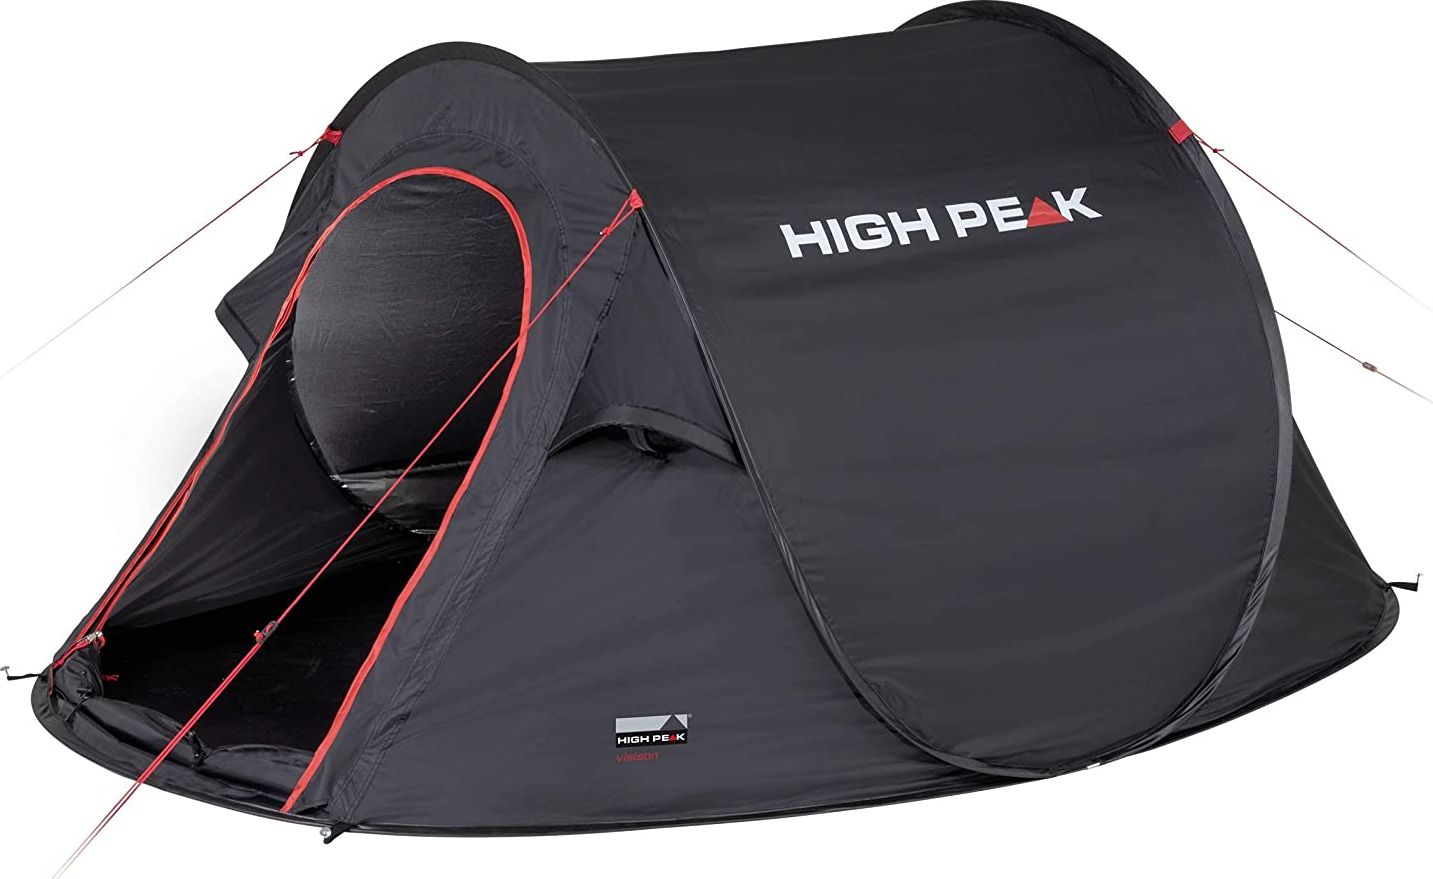 High peak tent Vision 3 3P - 10290  